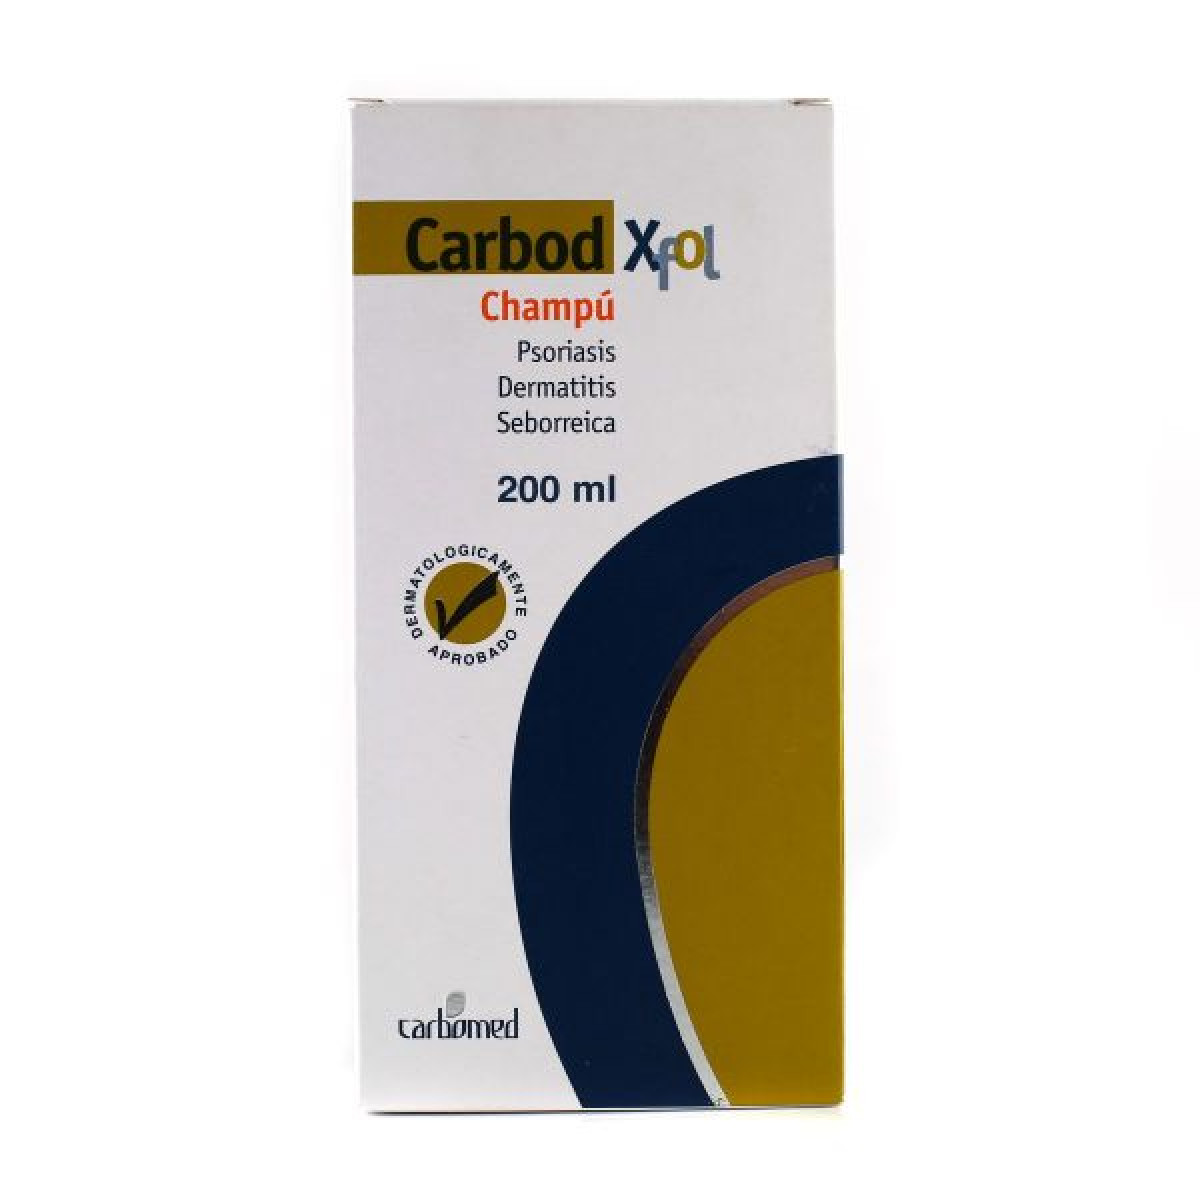 CARBOD XFOL SHAMPOO EXFOL X 200 ML